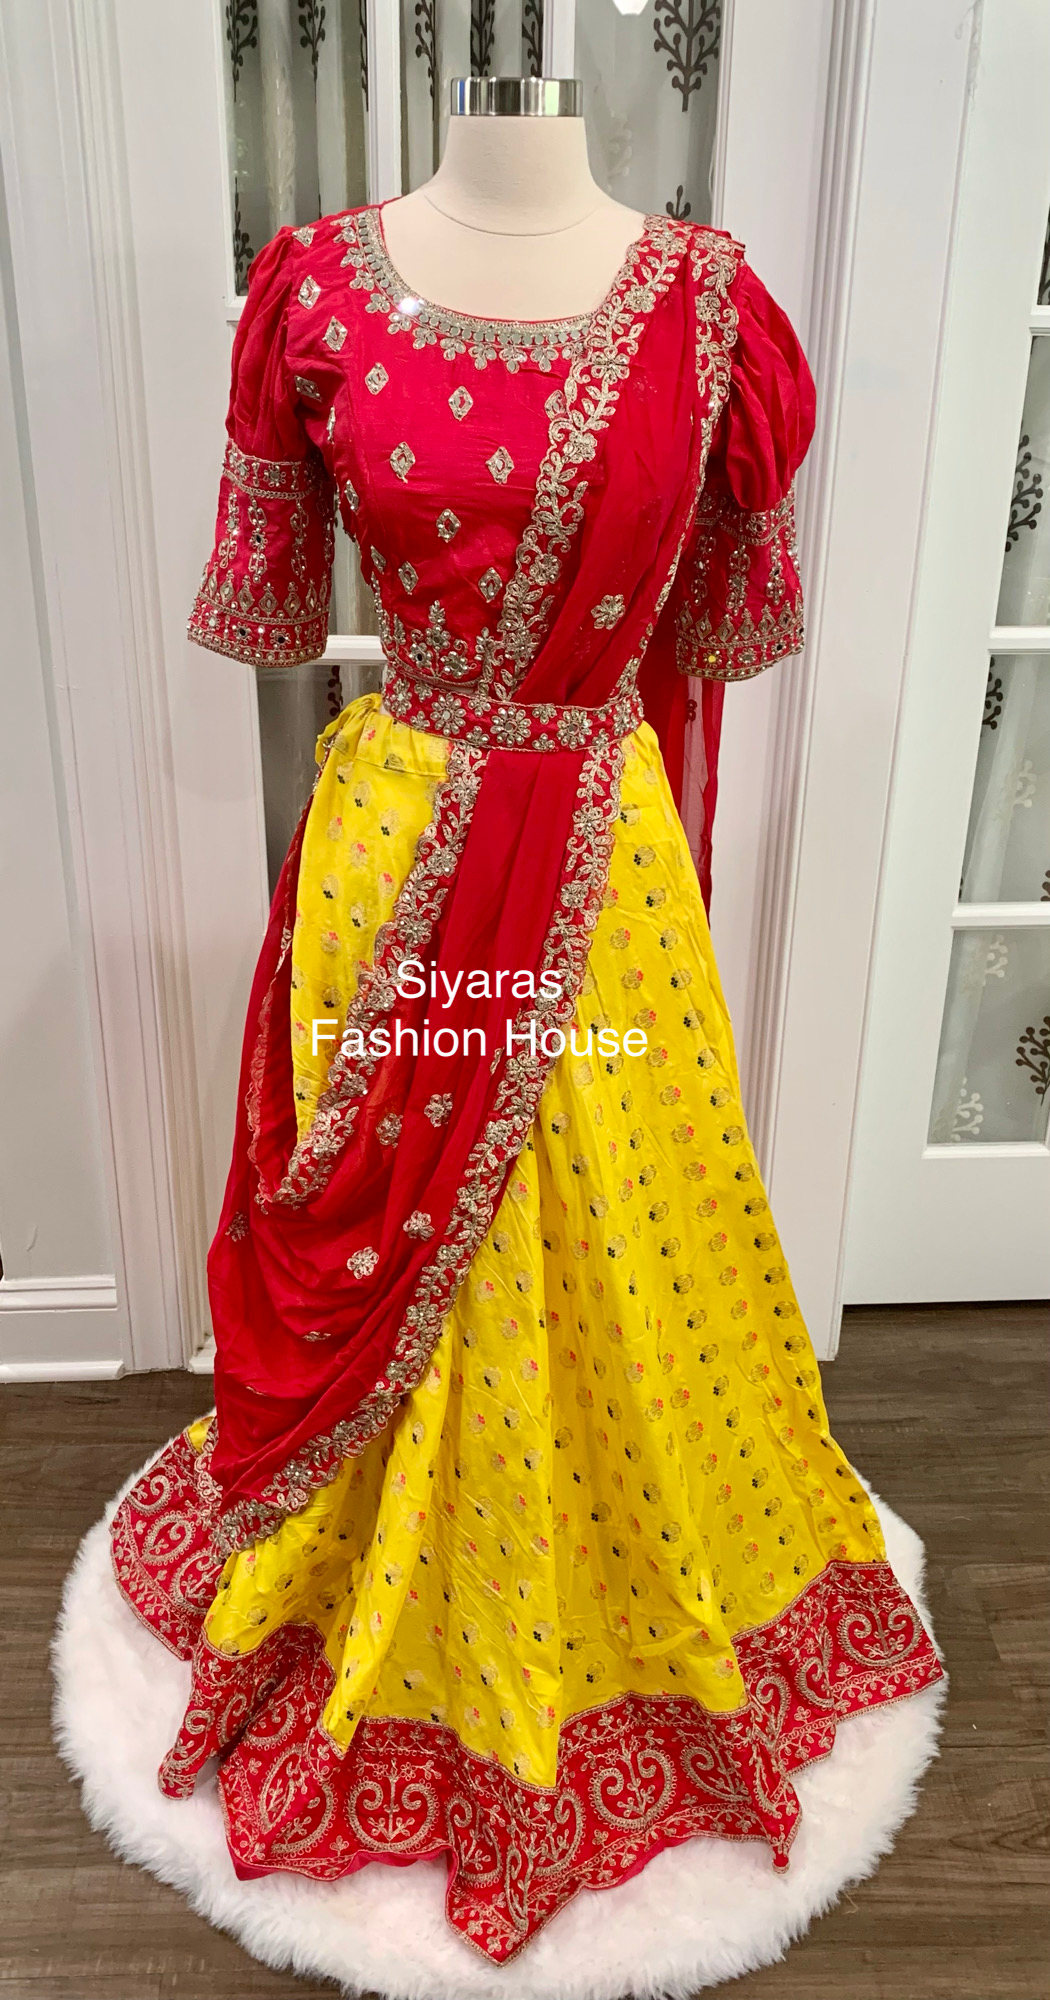 Buy GOOD FRIENDS Laxmi Design Waist Hip Belt stretchable Kamarbandh Fancy  wedding for Saree, Saree Belt, lehanga Choli, Gown Fancy Dress (Multicolor)  at Amazon.in